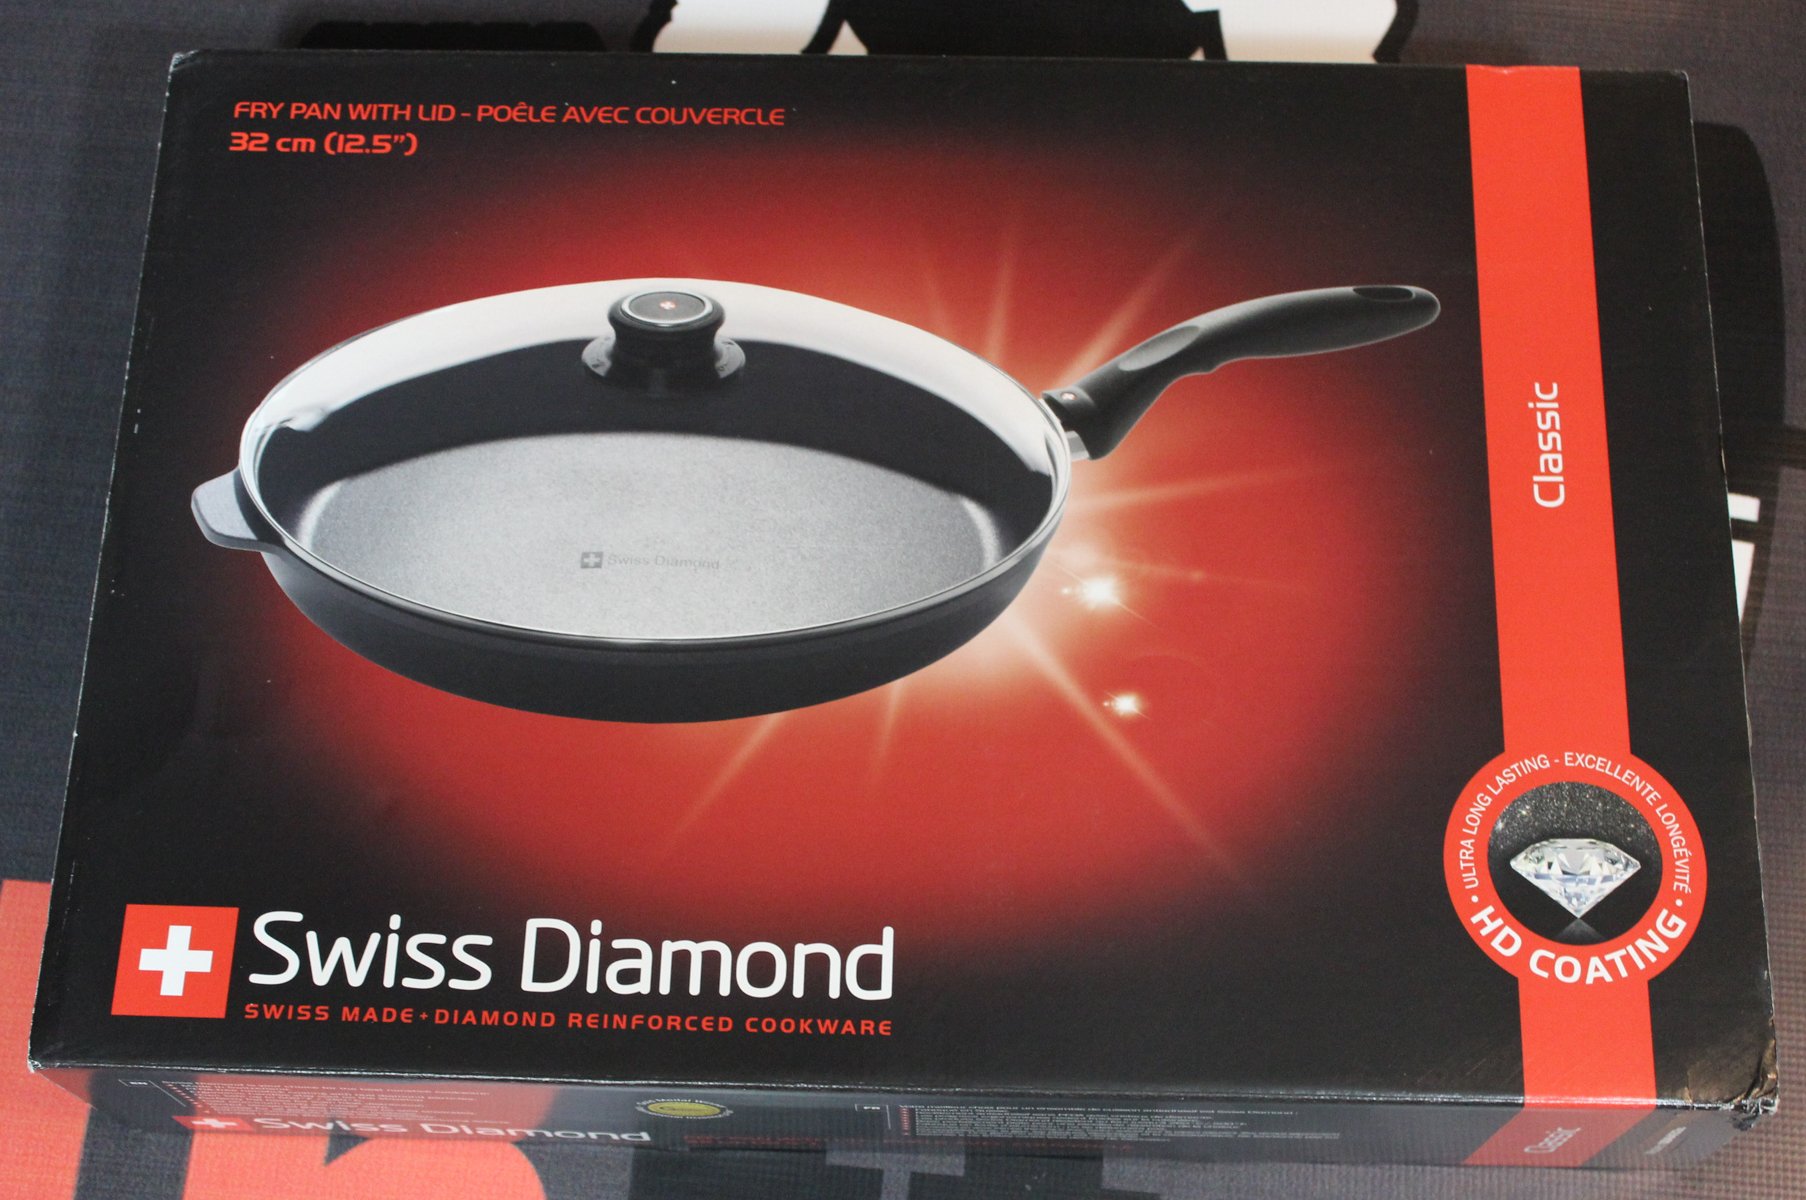 swiss diamond fry pan review